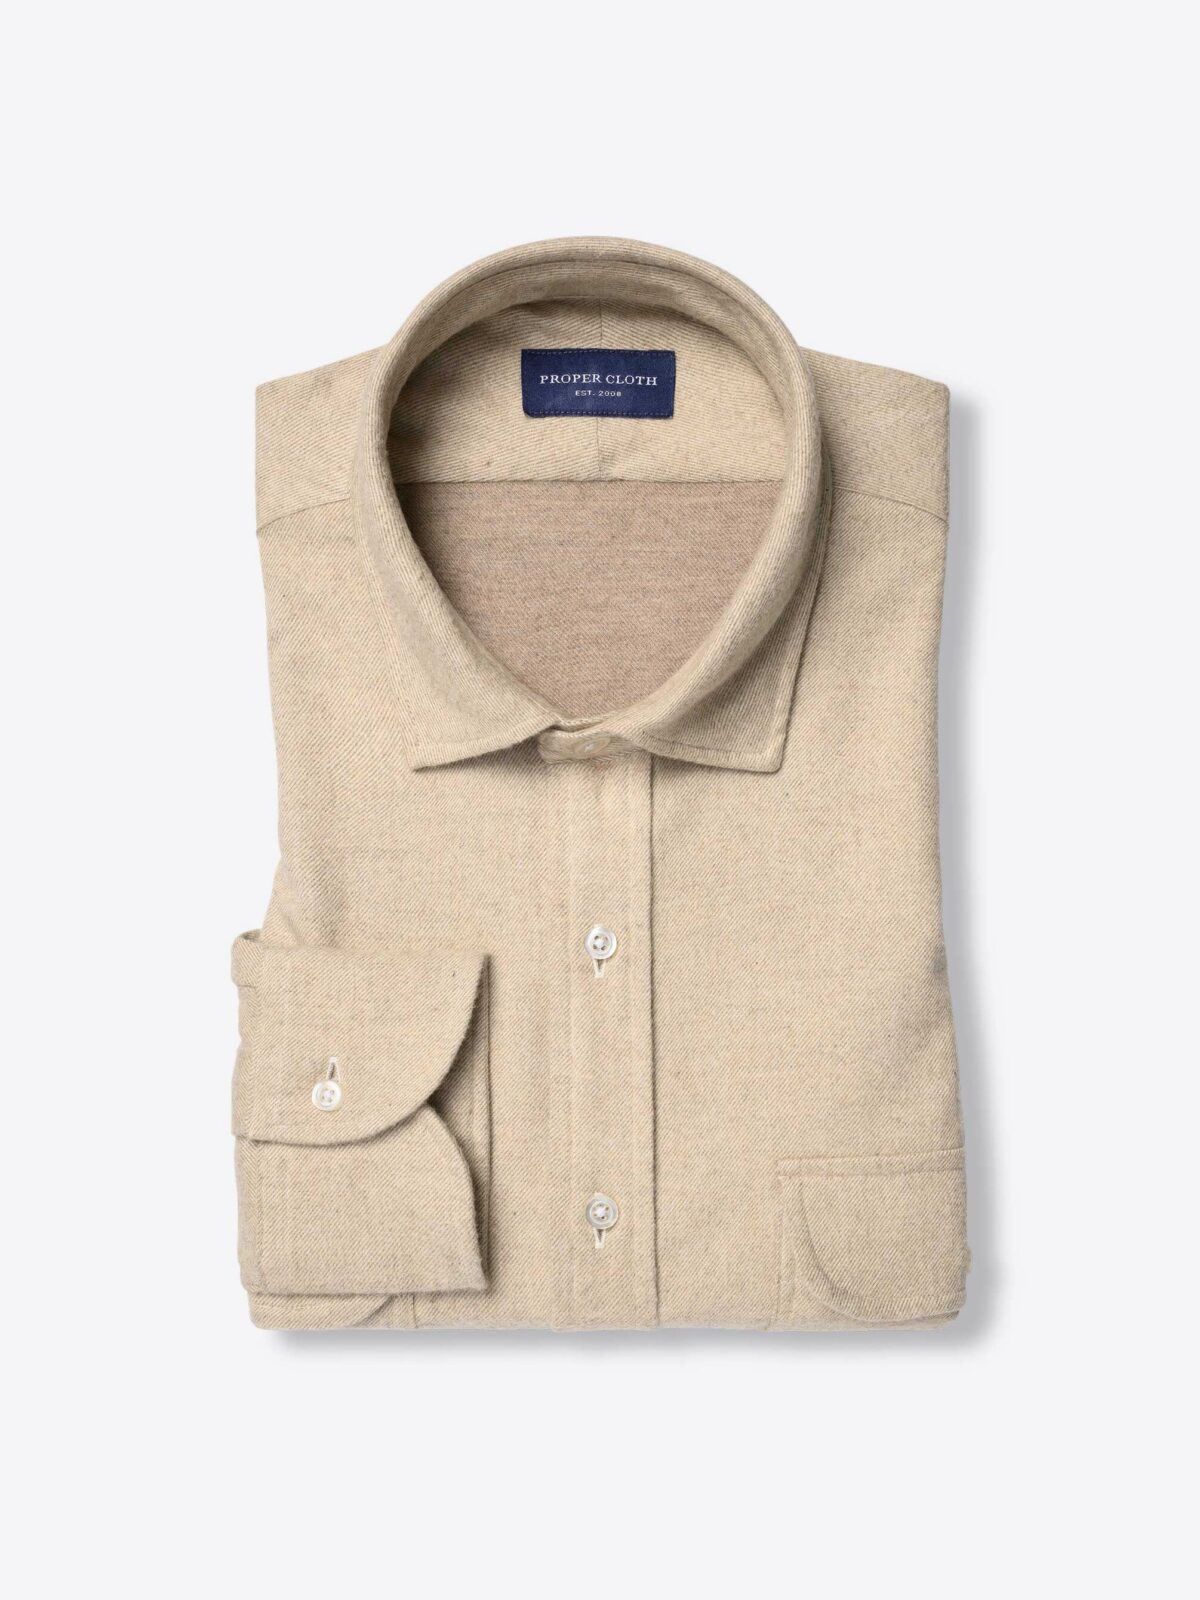 Canclini Beige Twill Beacon Flannel Shirt by Proper Cloth